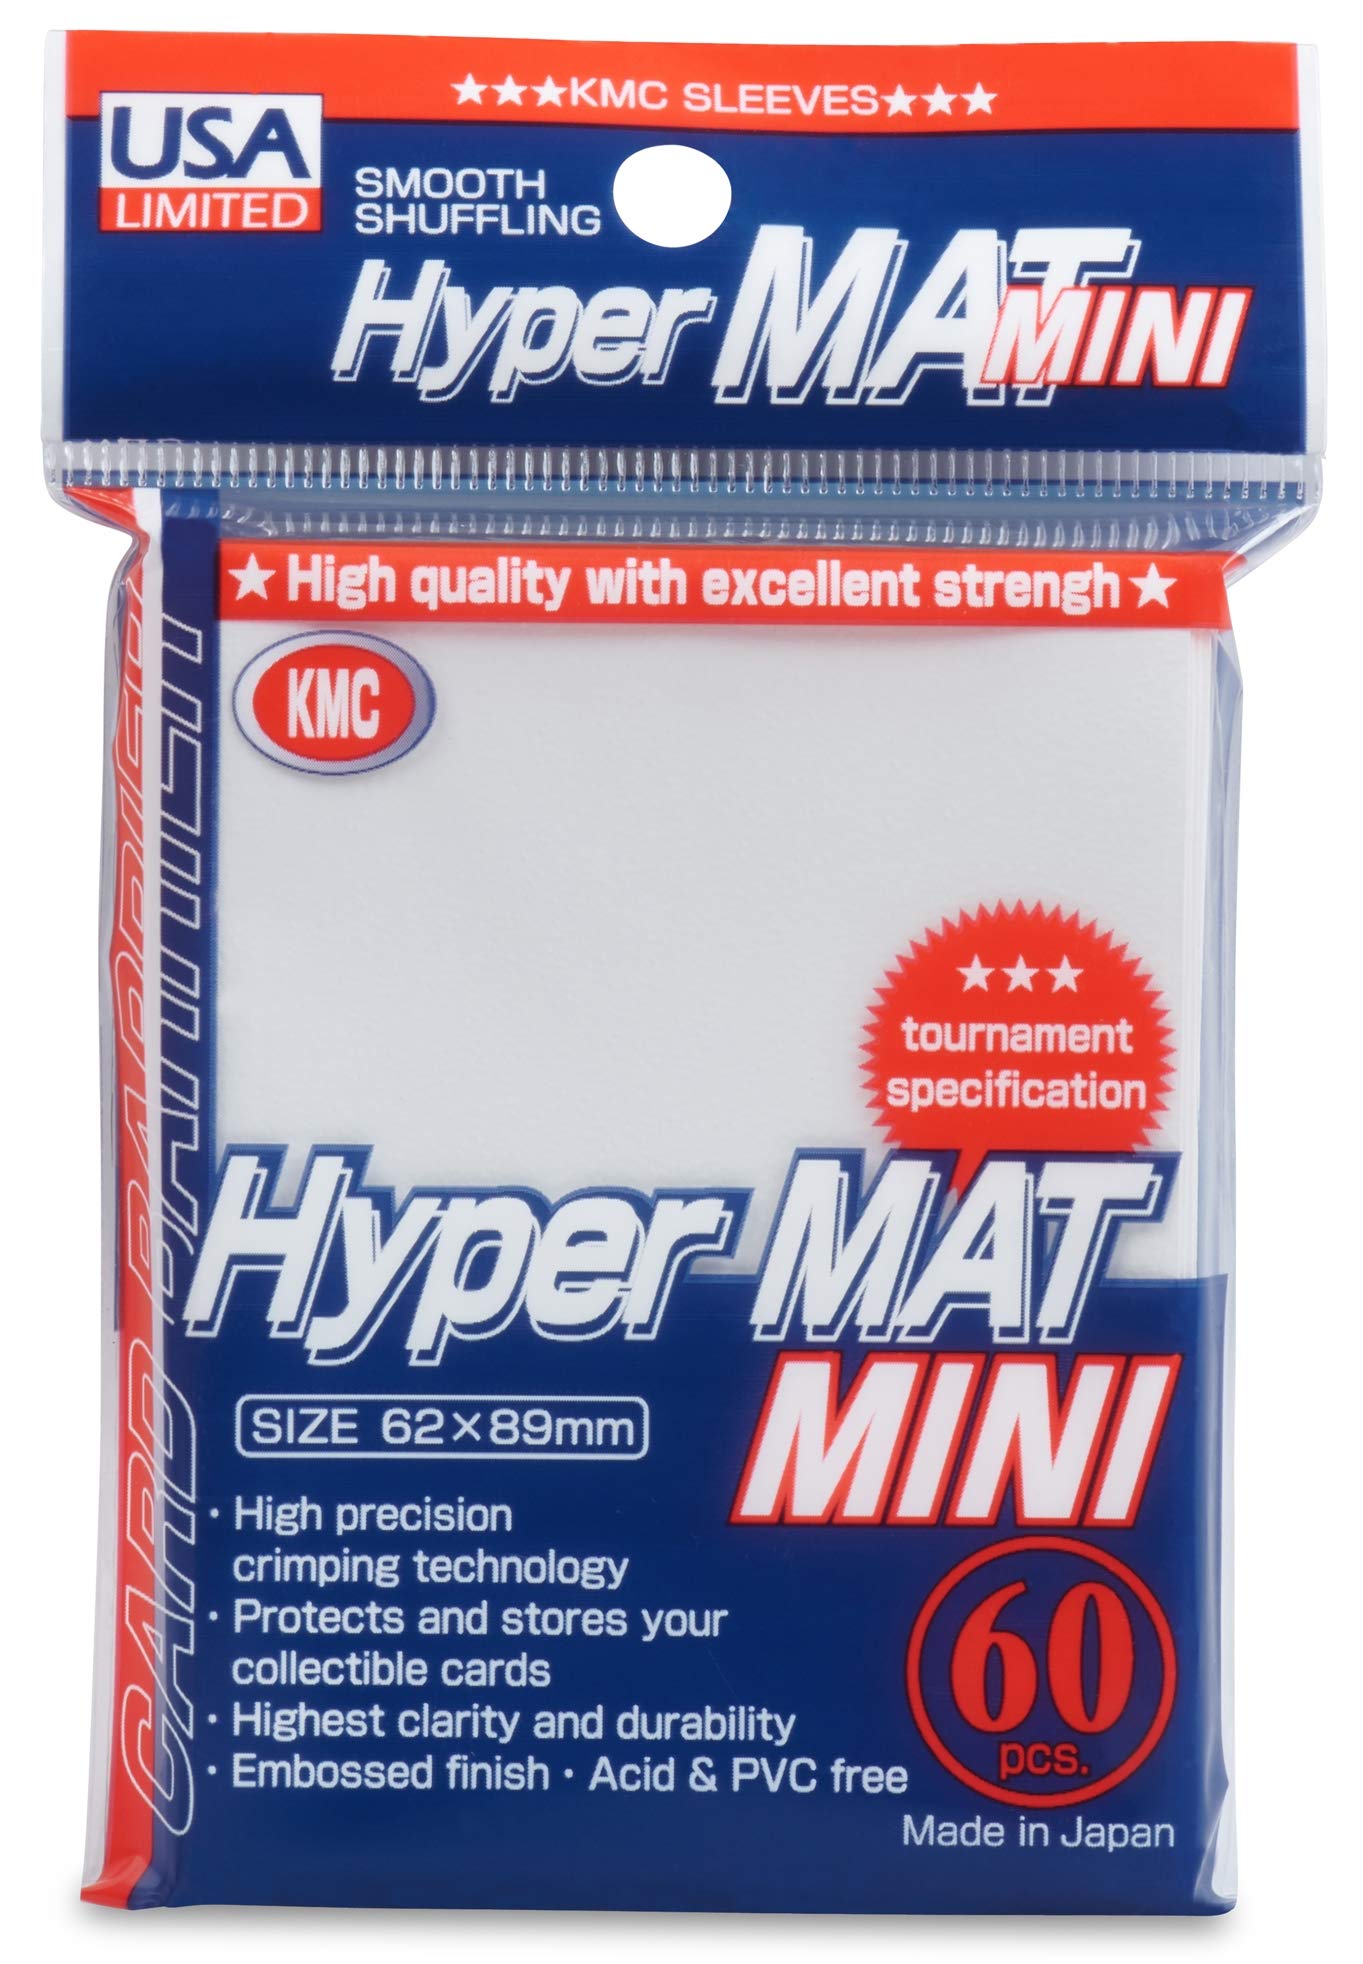 Kmc Usa, LLC Accessories Kmc Usa Sleeves: Mini Size Hyper Matte White (60) USA Pack